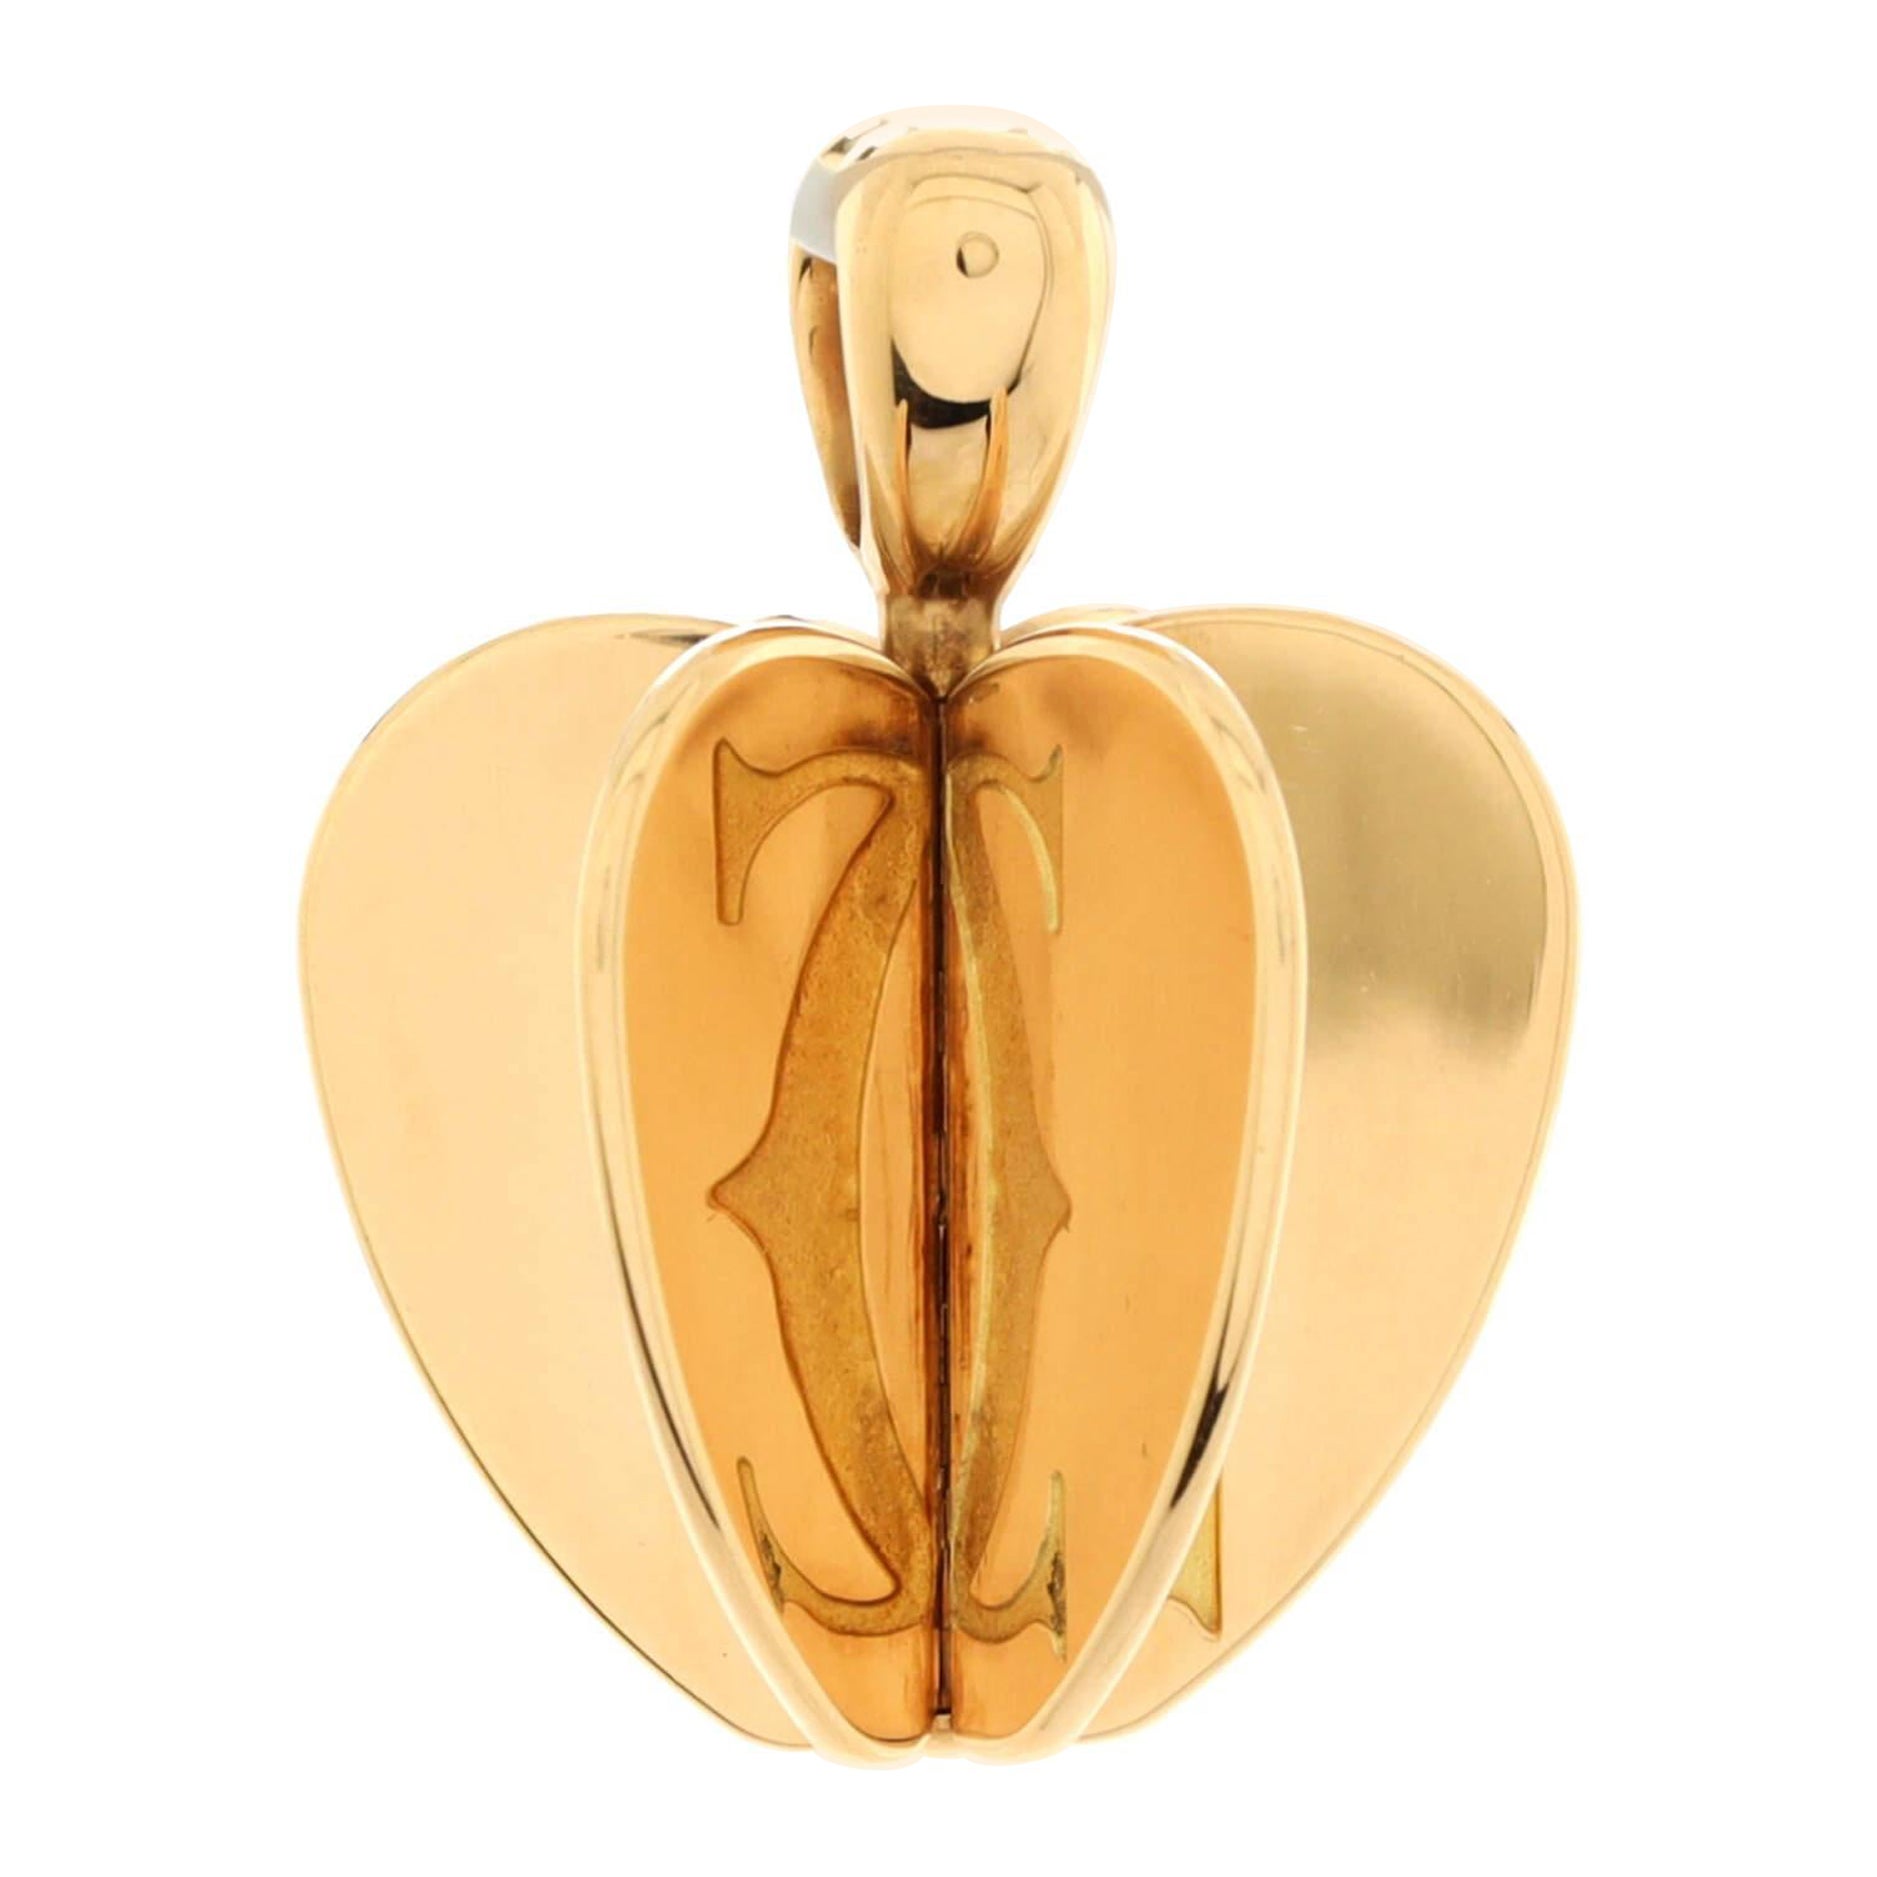 Cartier Golden Apple Pendant Necklace 18K Yellow Gold